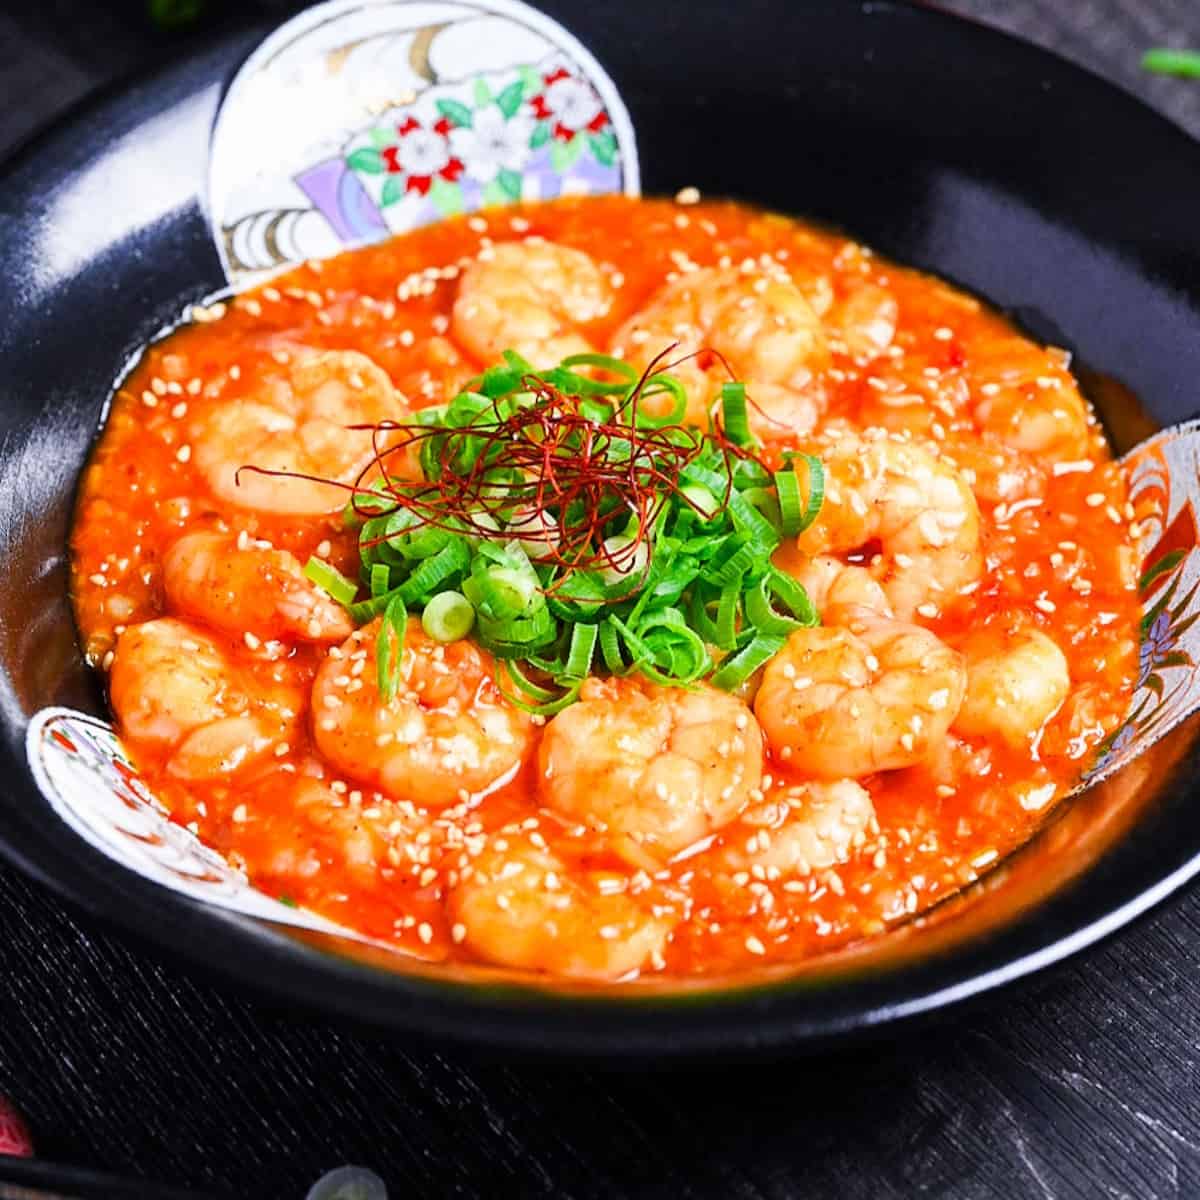 Ebi Chili (Japanese Shrimp in Chili Sauce)